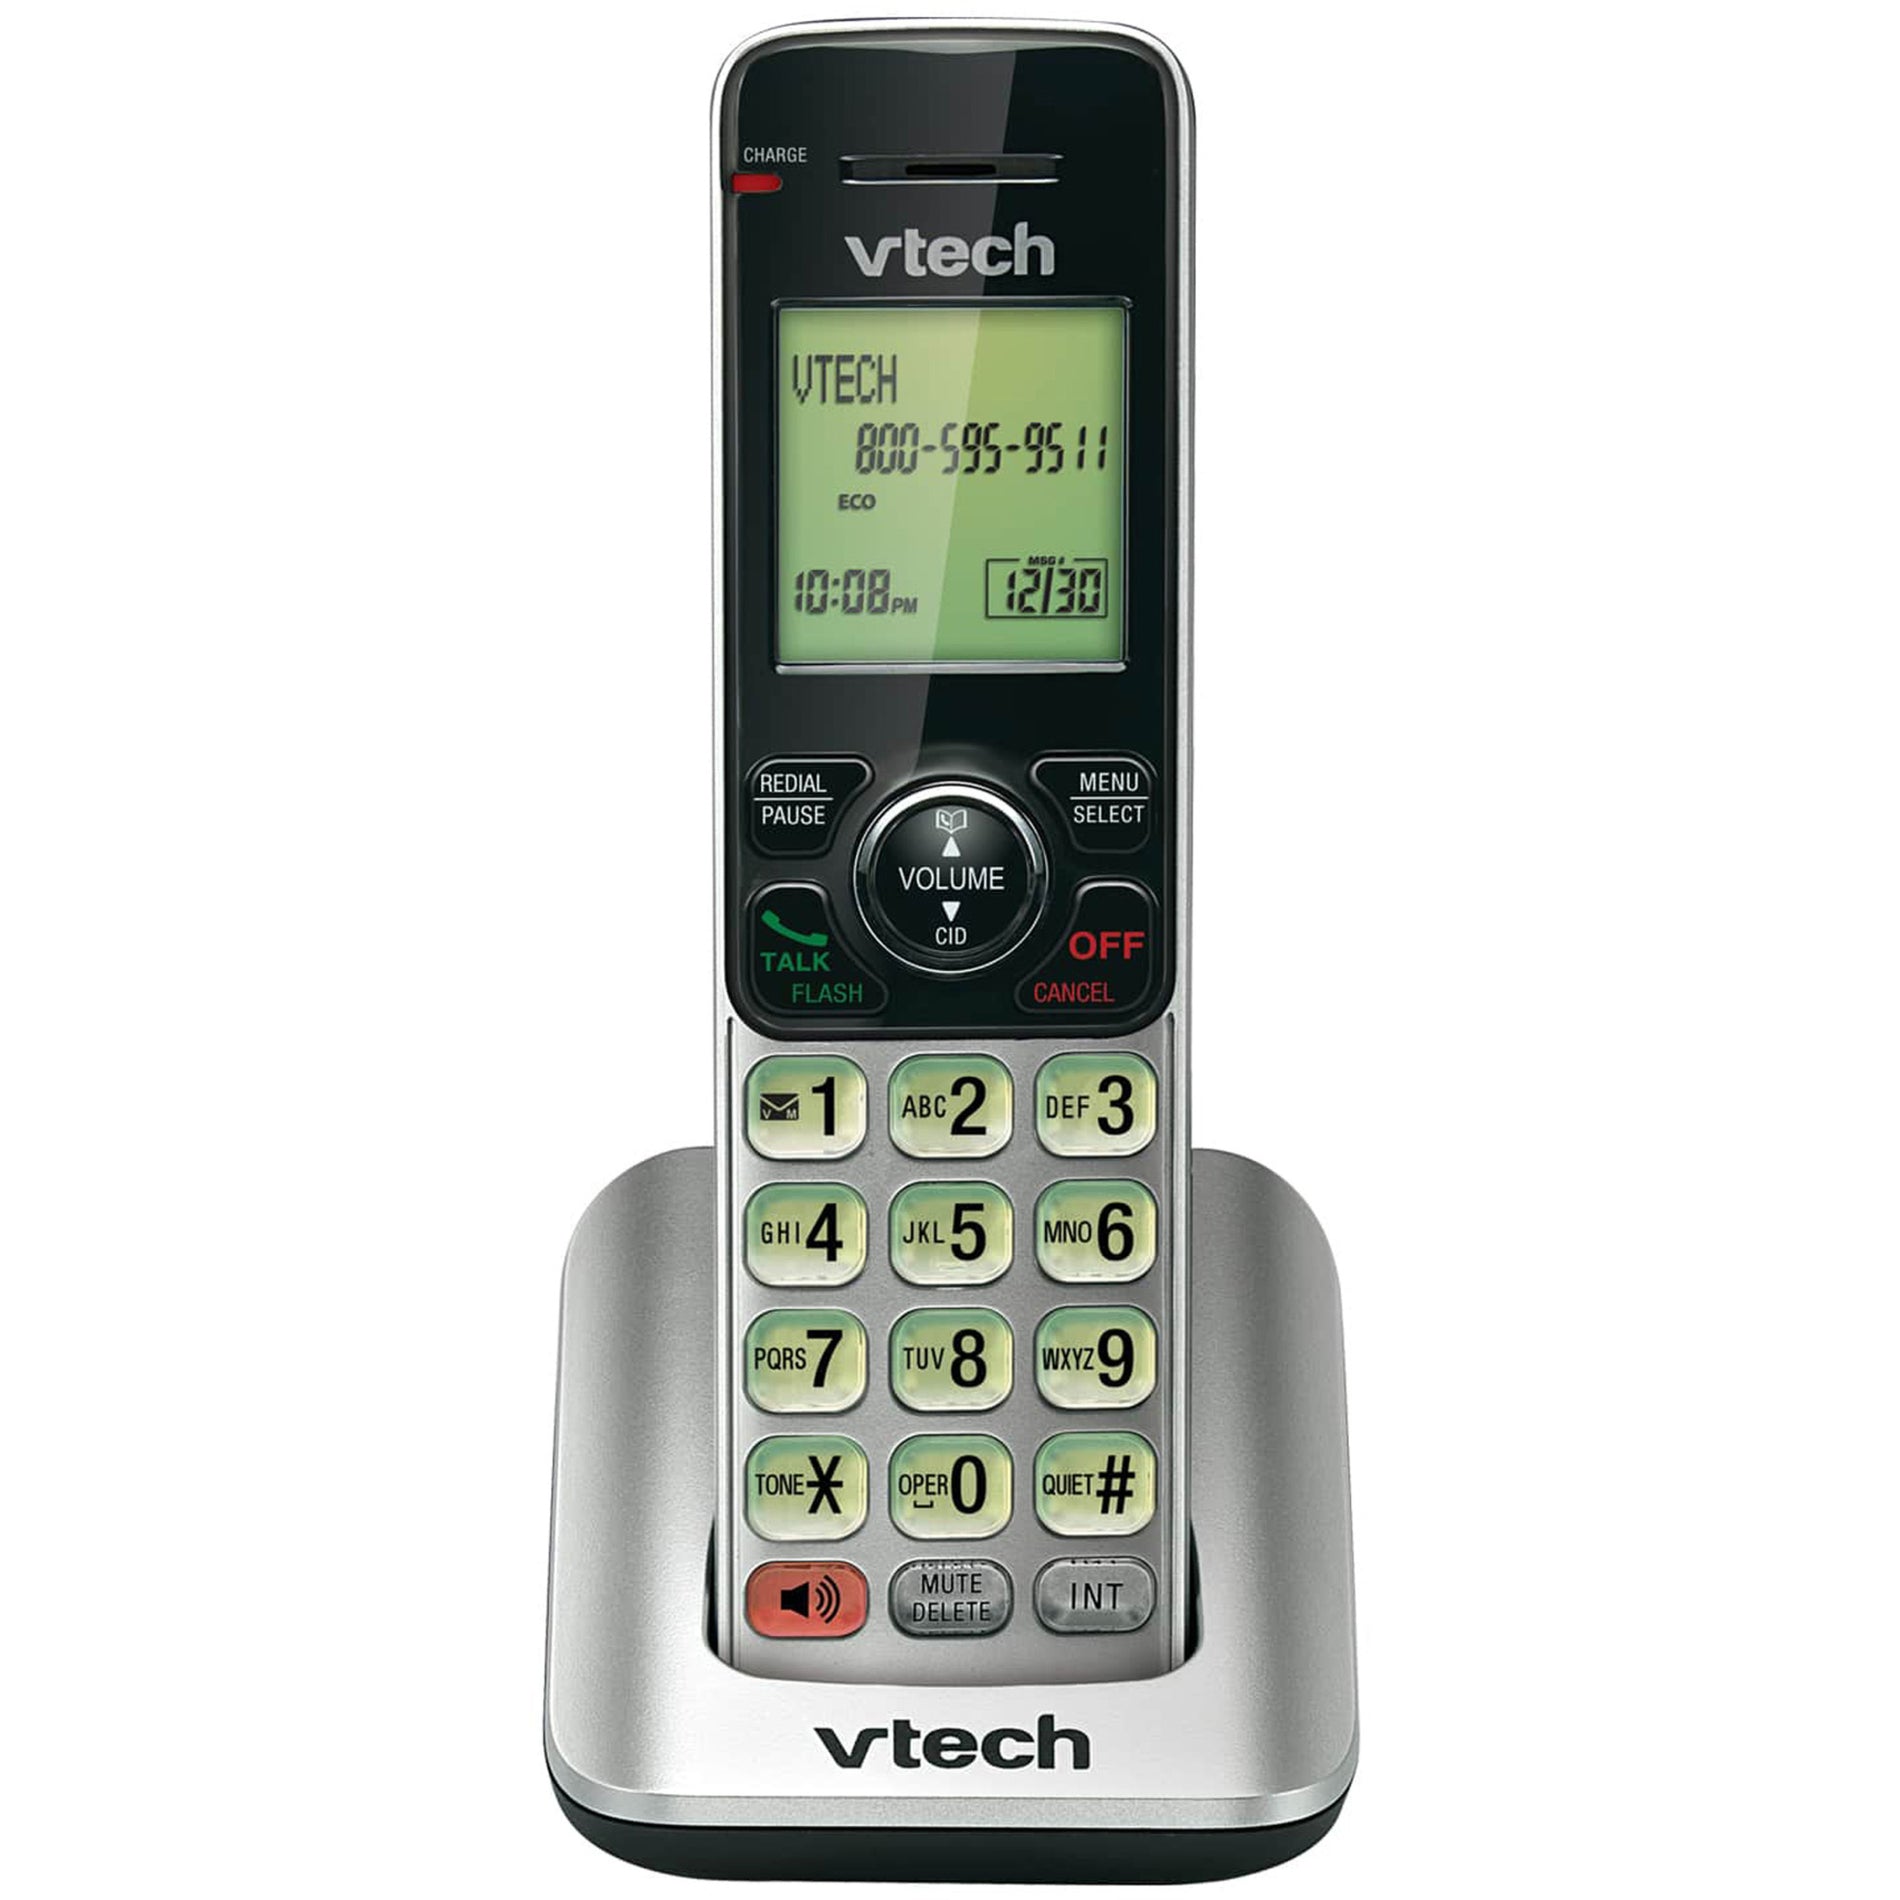 VTech CS6609 dect_6.0 1-Handset Landline Telephone, Caller ID/Call Waiting, Volume Control, Speakerphone